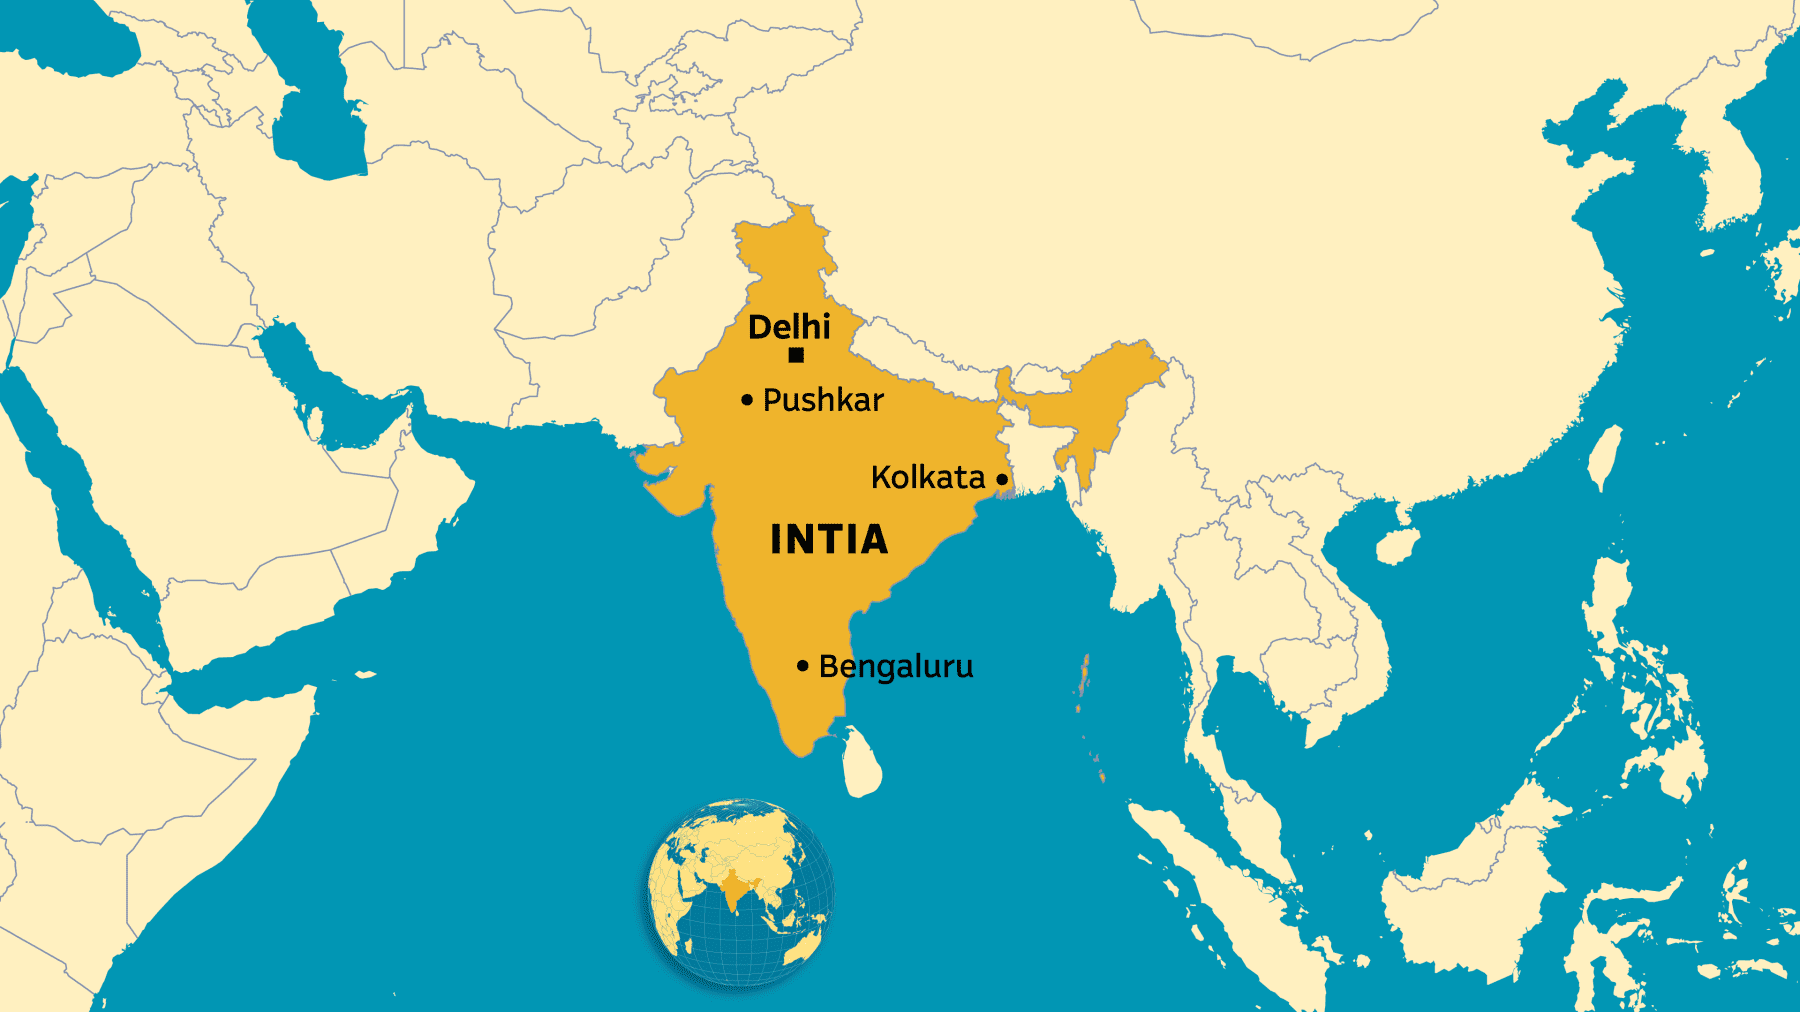 Kartalla Delhi, Pushkar, Kolkata ja Bengaluru Intiassa.